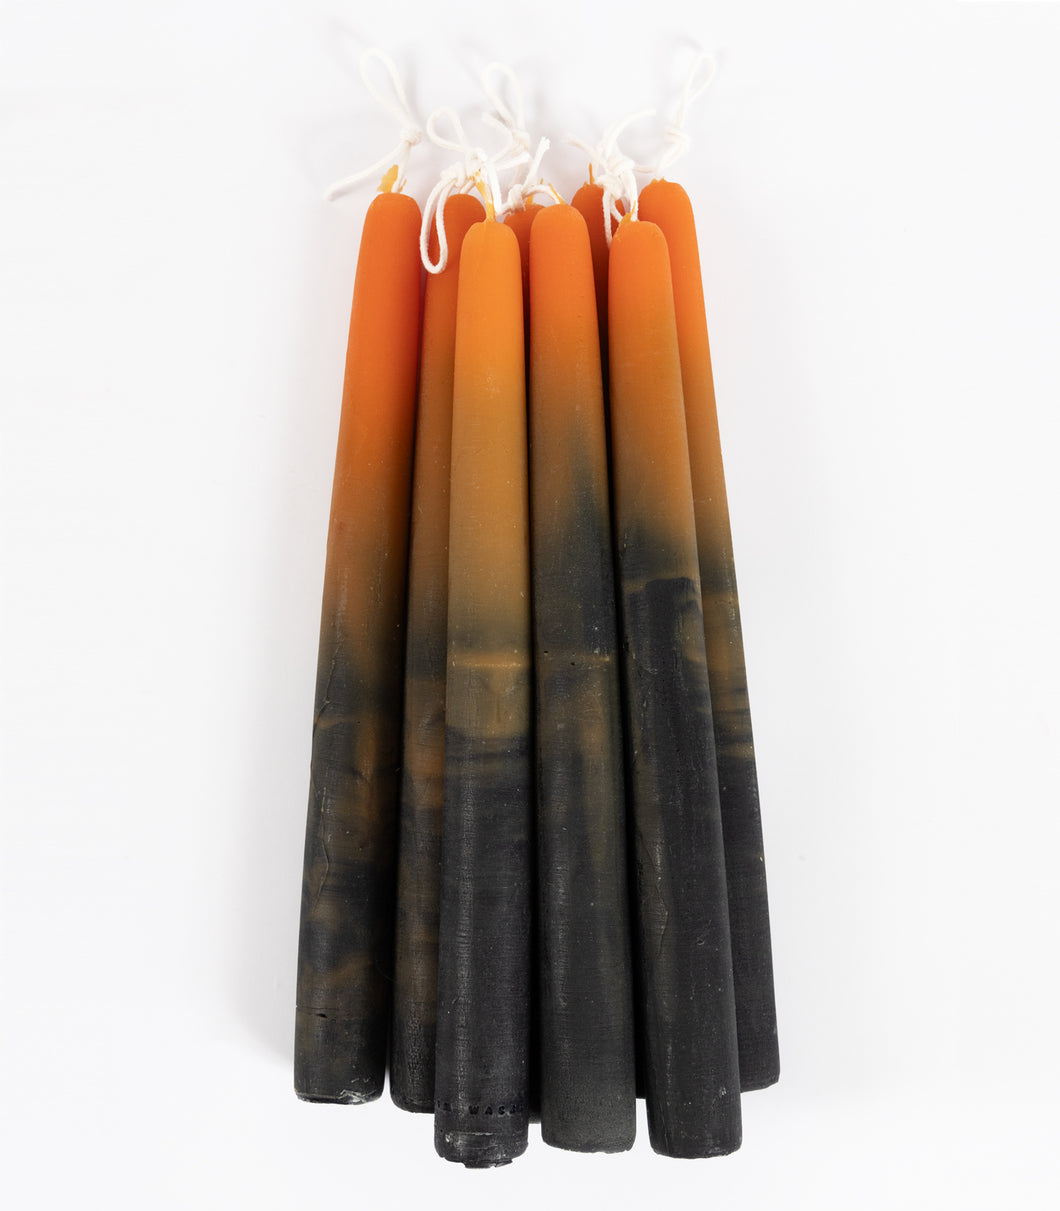 Orange Black Beeswax Tapers